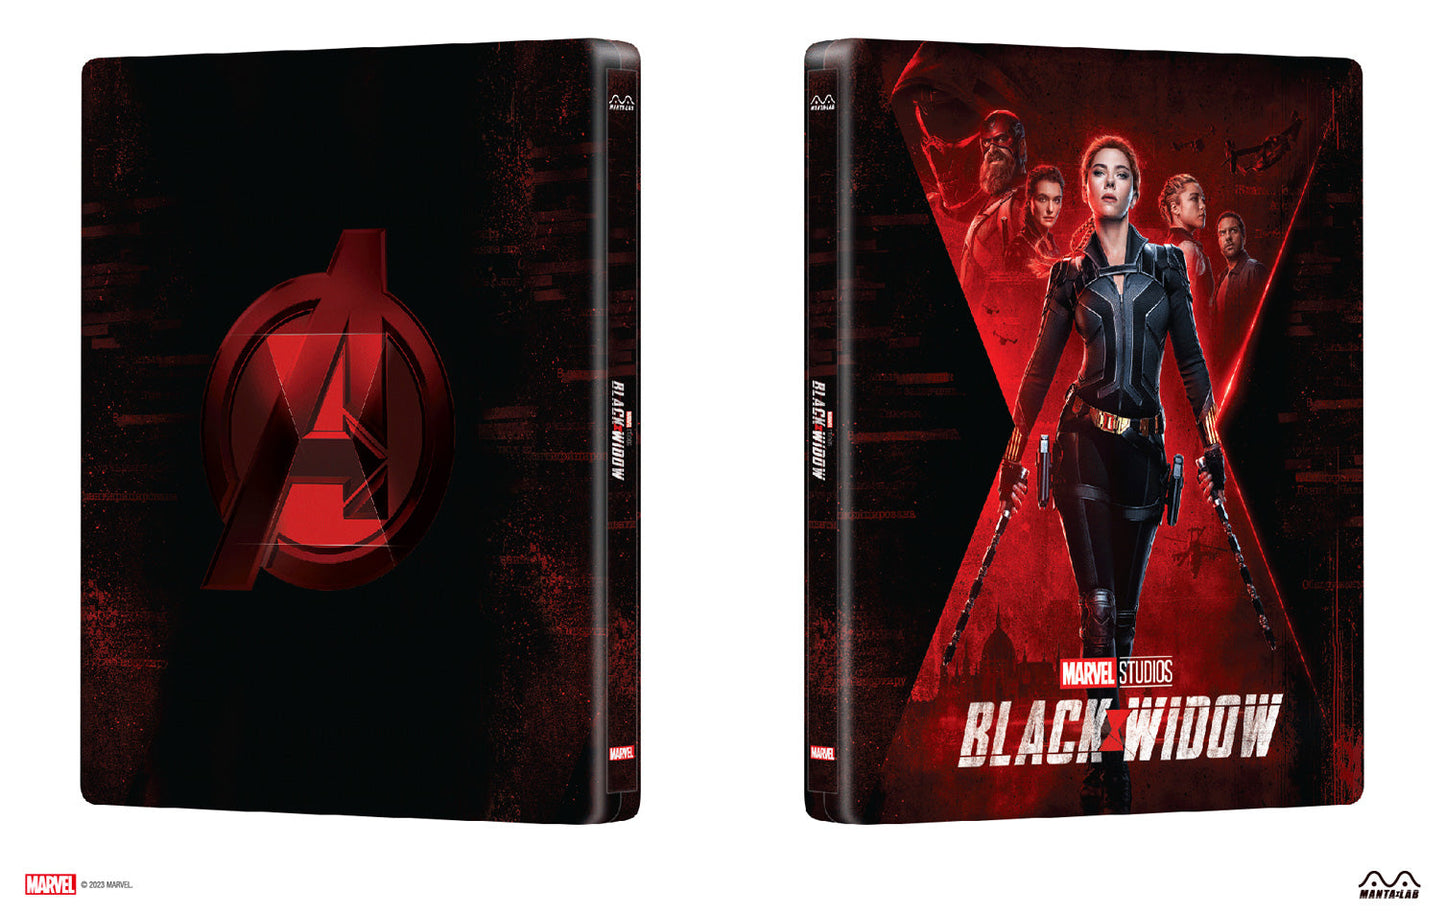 Black Widow (Discless) Steelbook Manta Lab Exclusive MCP#-002 Full Slip